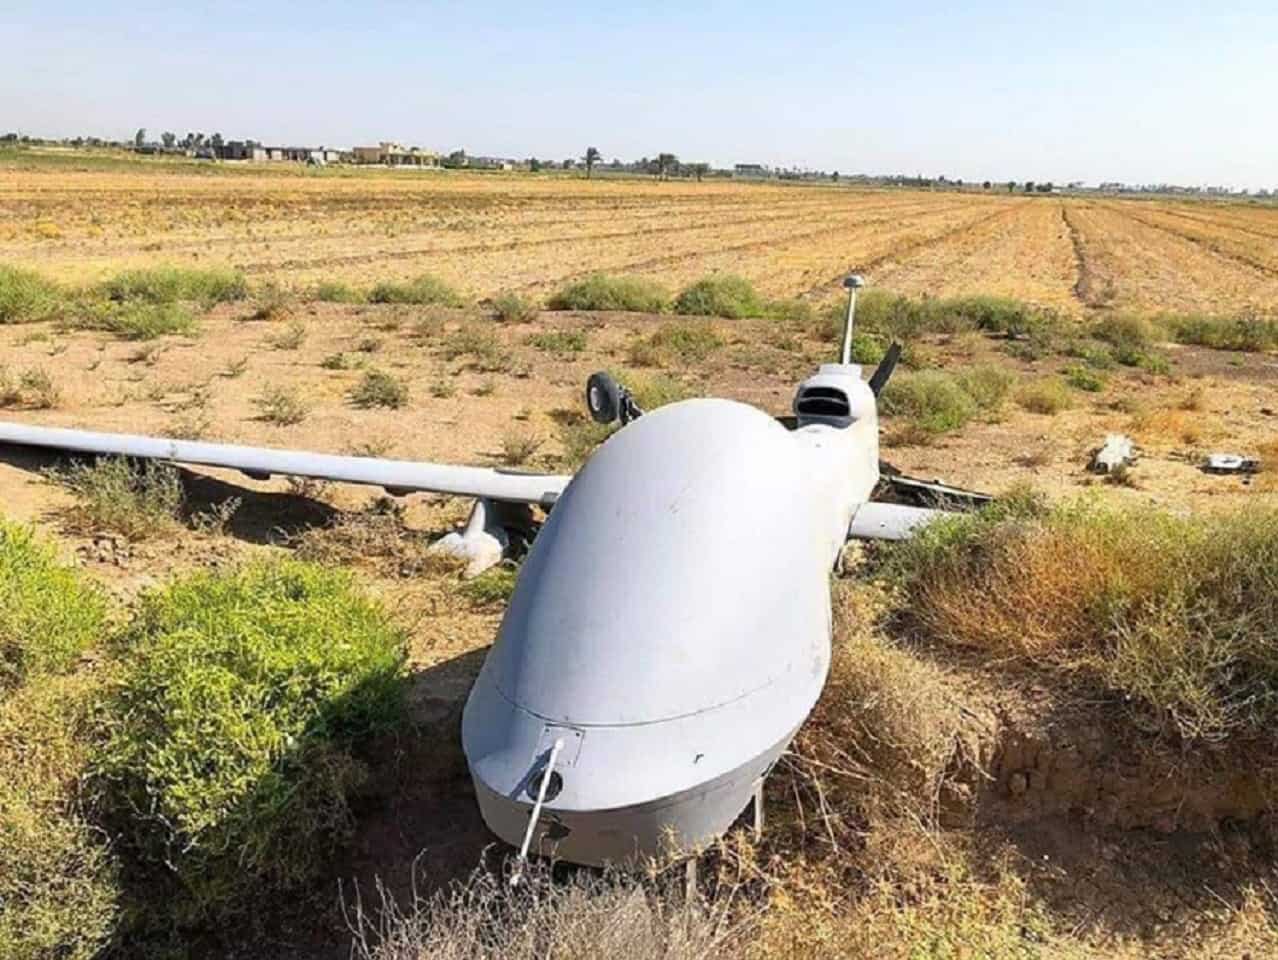 U.S. MQ-1C Gray Eagle Combat Drone reportedly crashed in Iraq